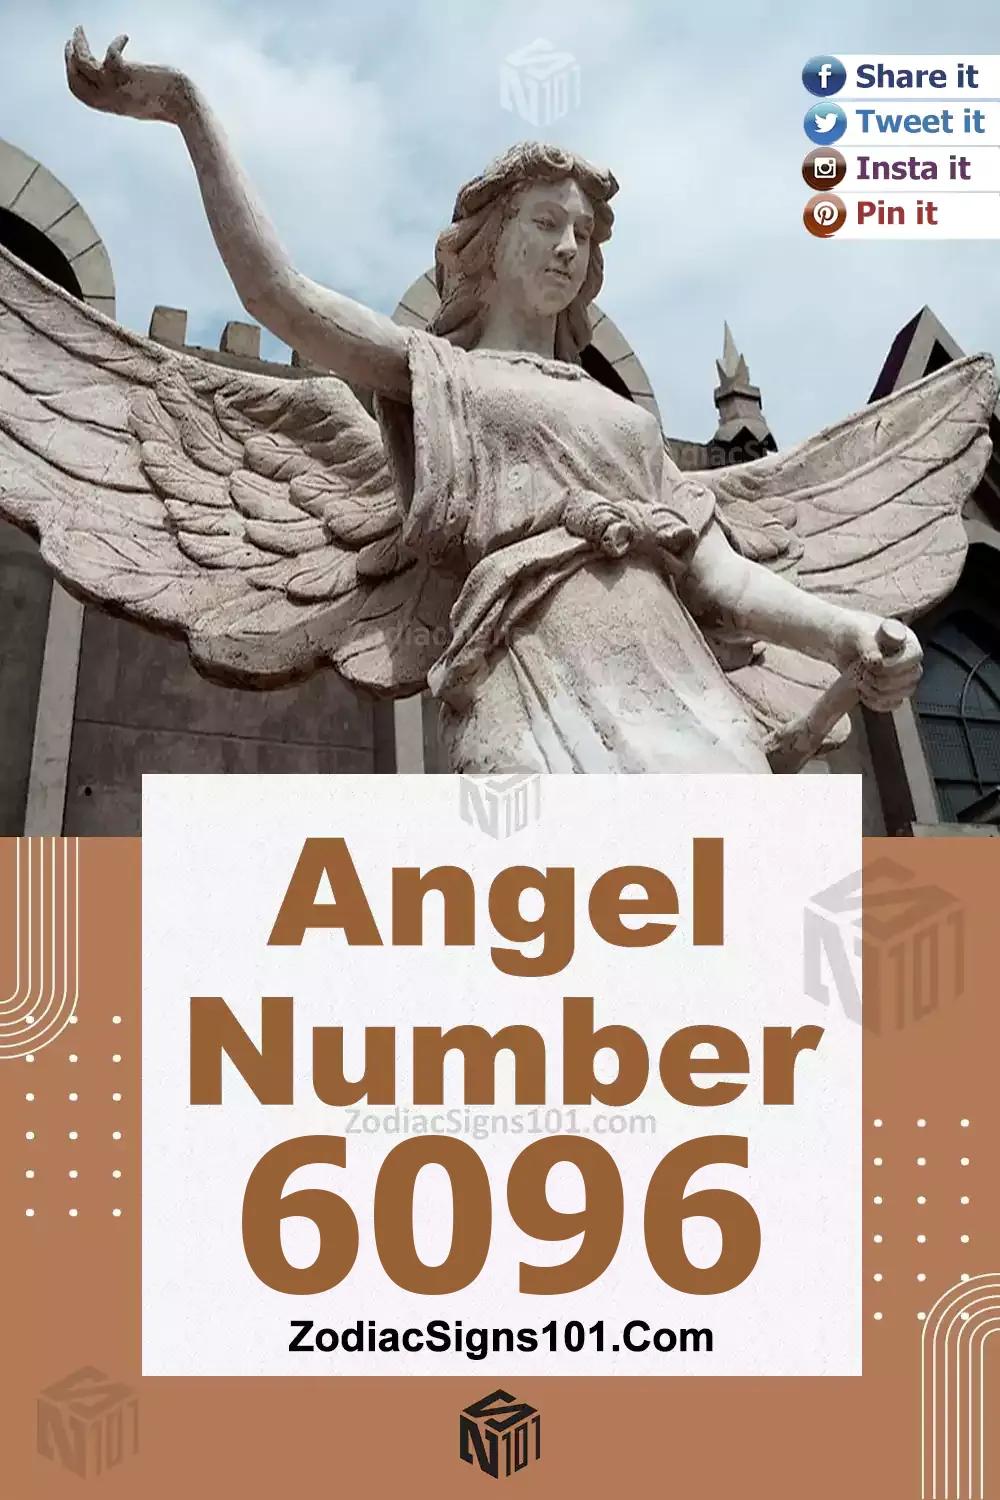 6096-Angel-Number-Meaning.jpg